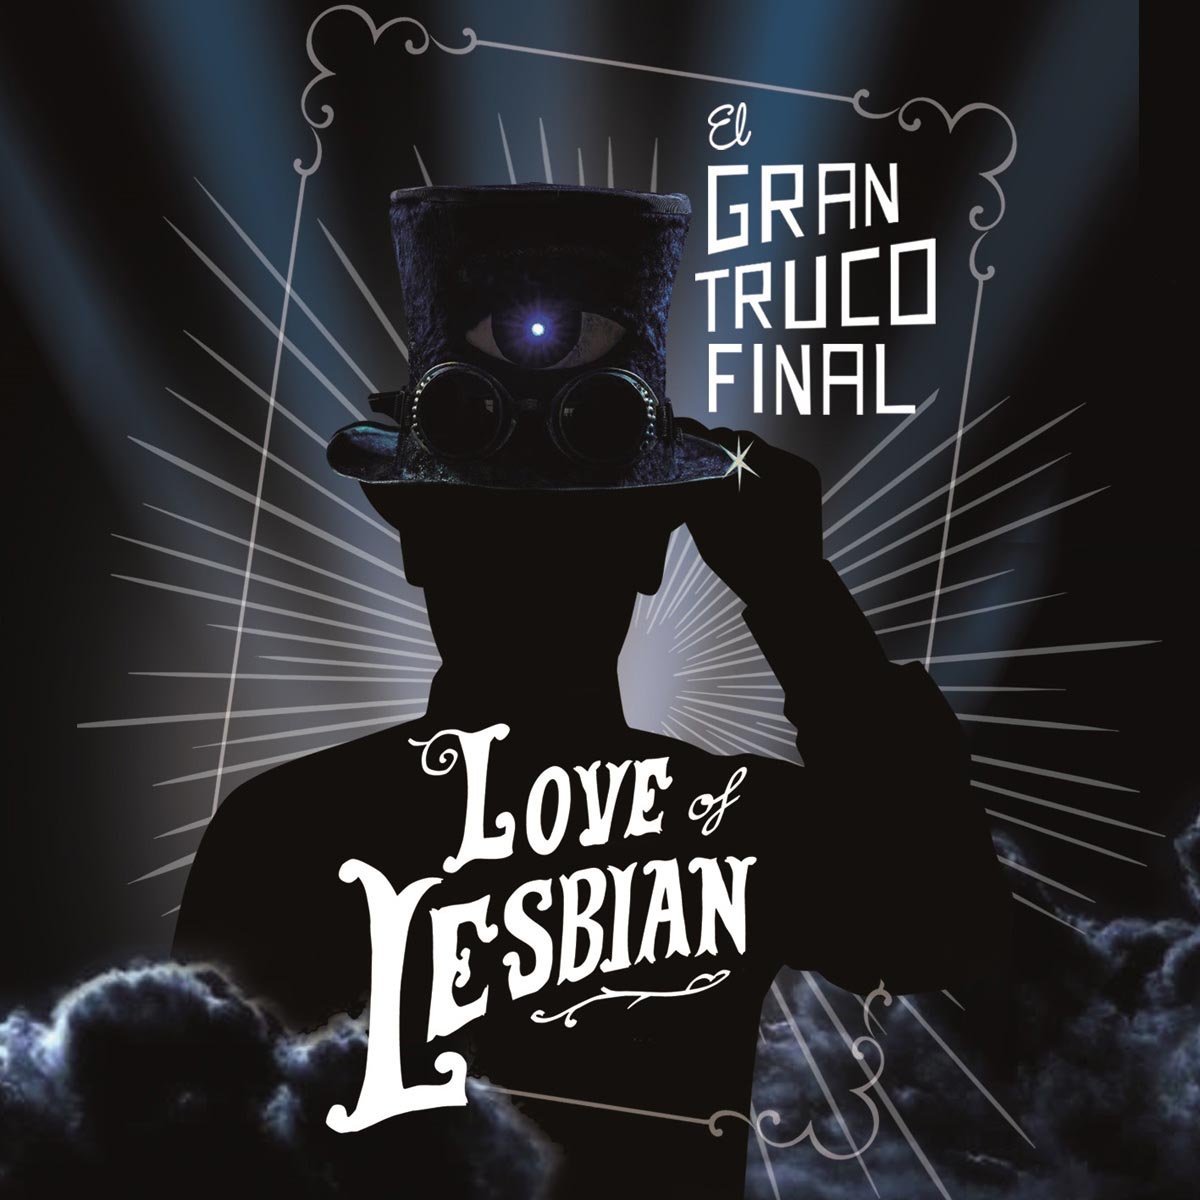 Dvd + 2 Cds Love Of Lesbian el Gran Truco Final